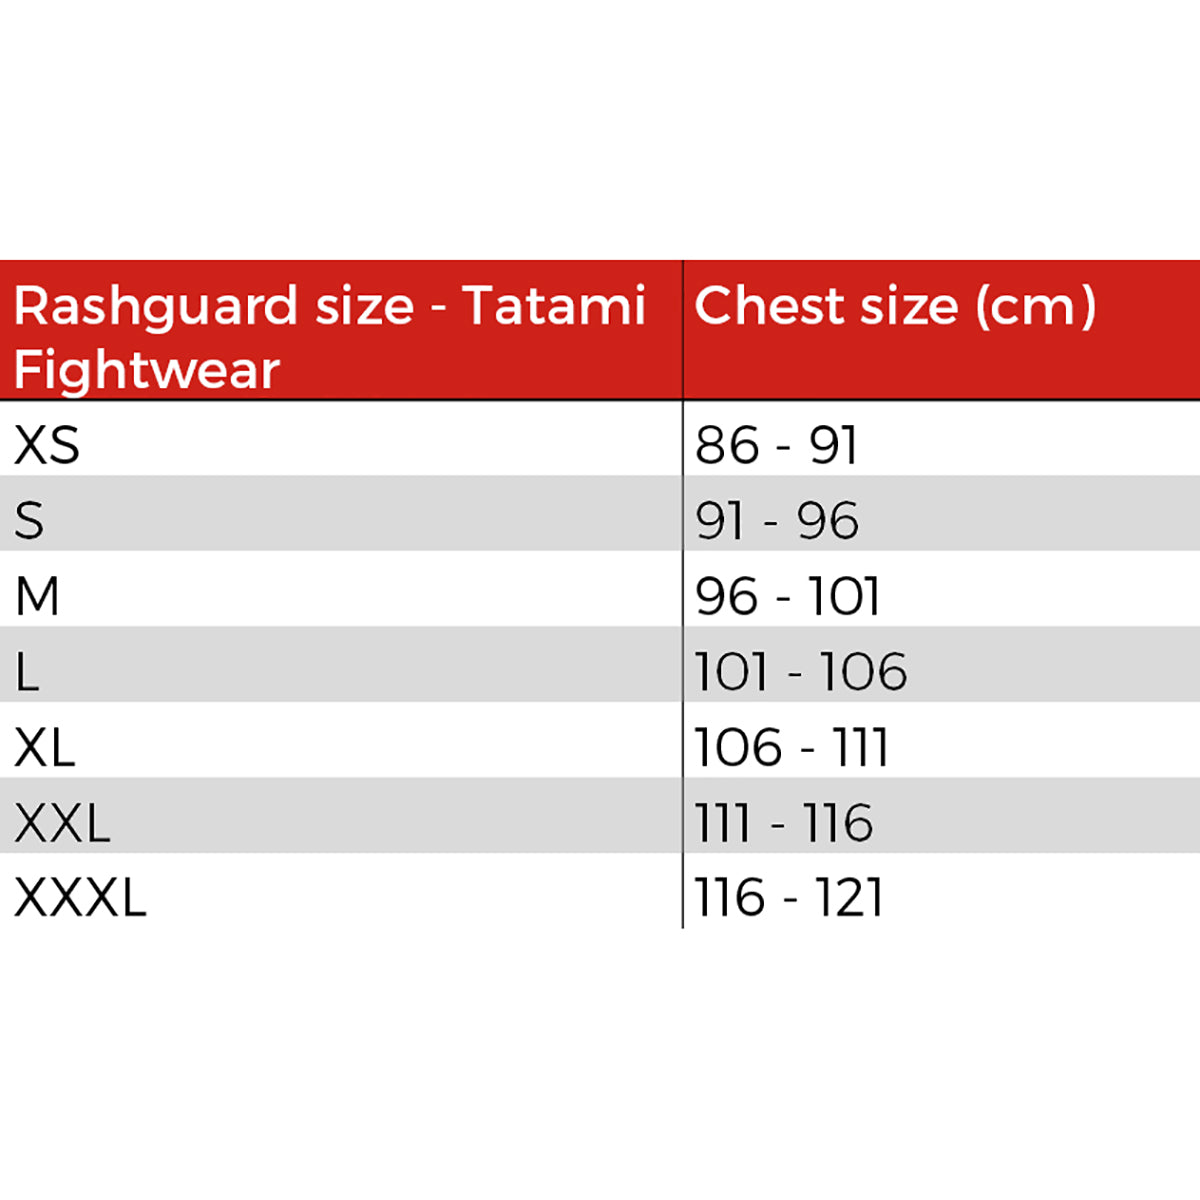 Tatami Fightwear Recharge Short Sleeve Rashguard - Pink Tatami Fightwear